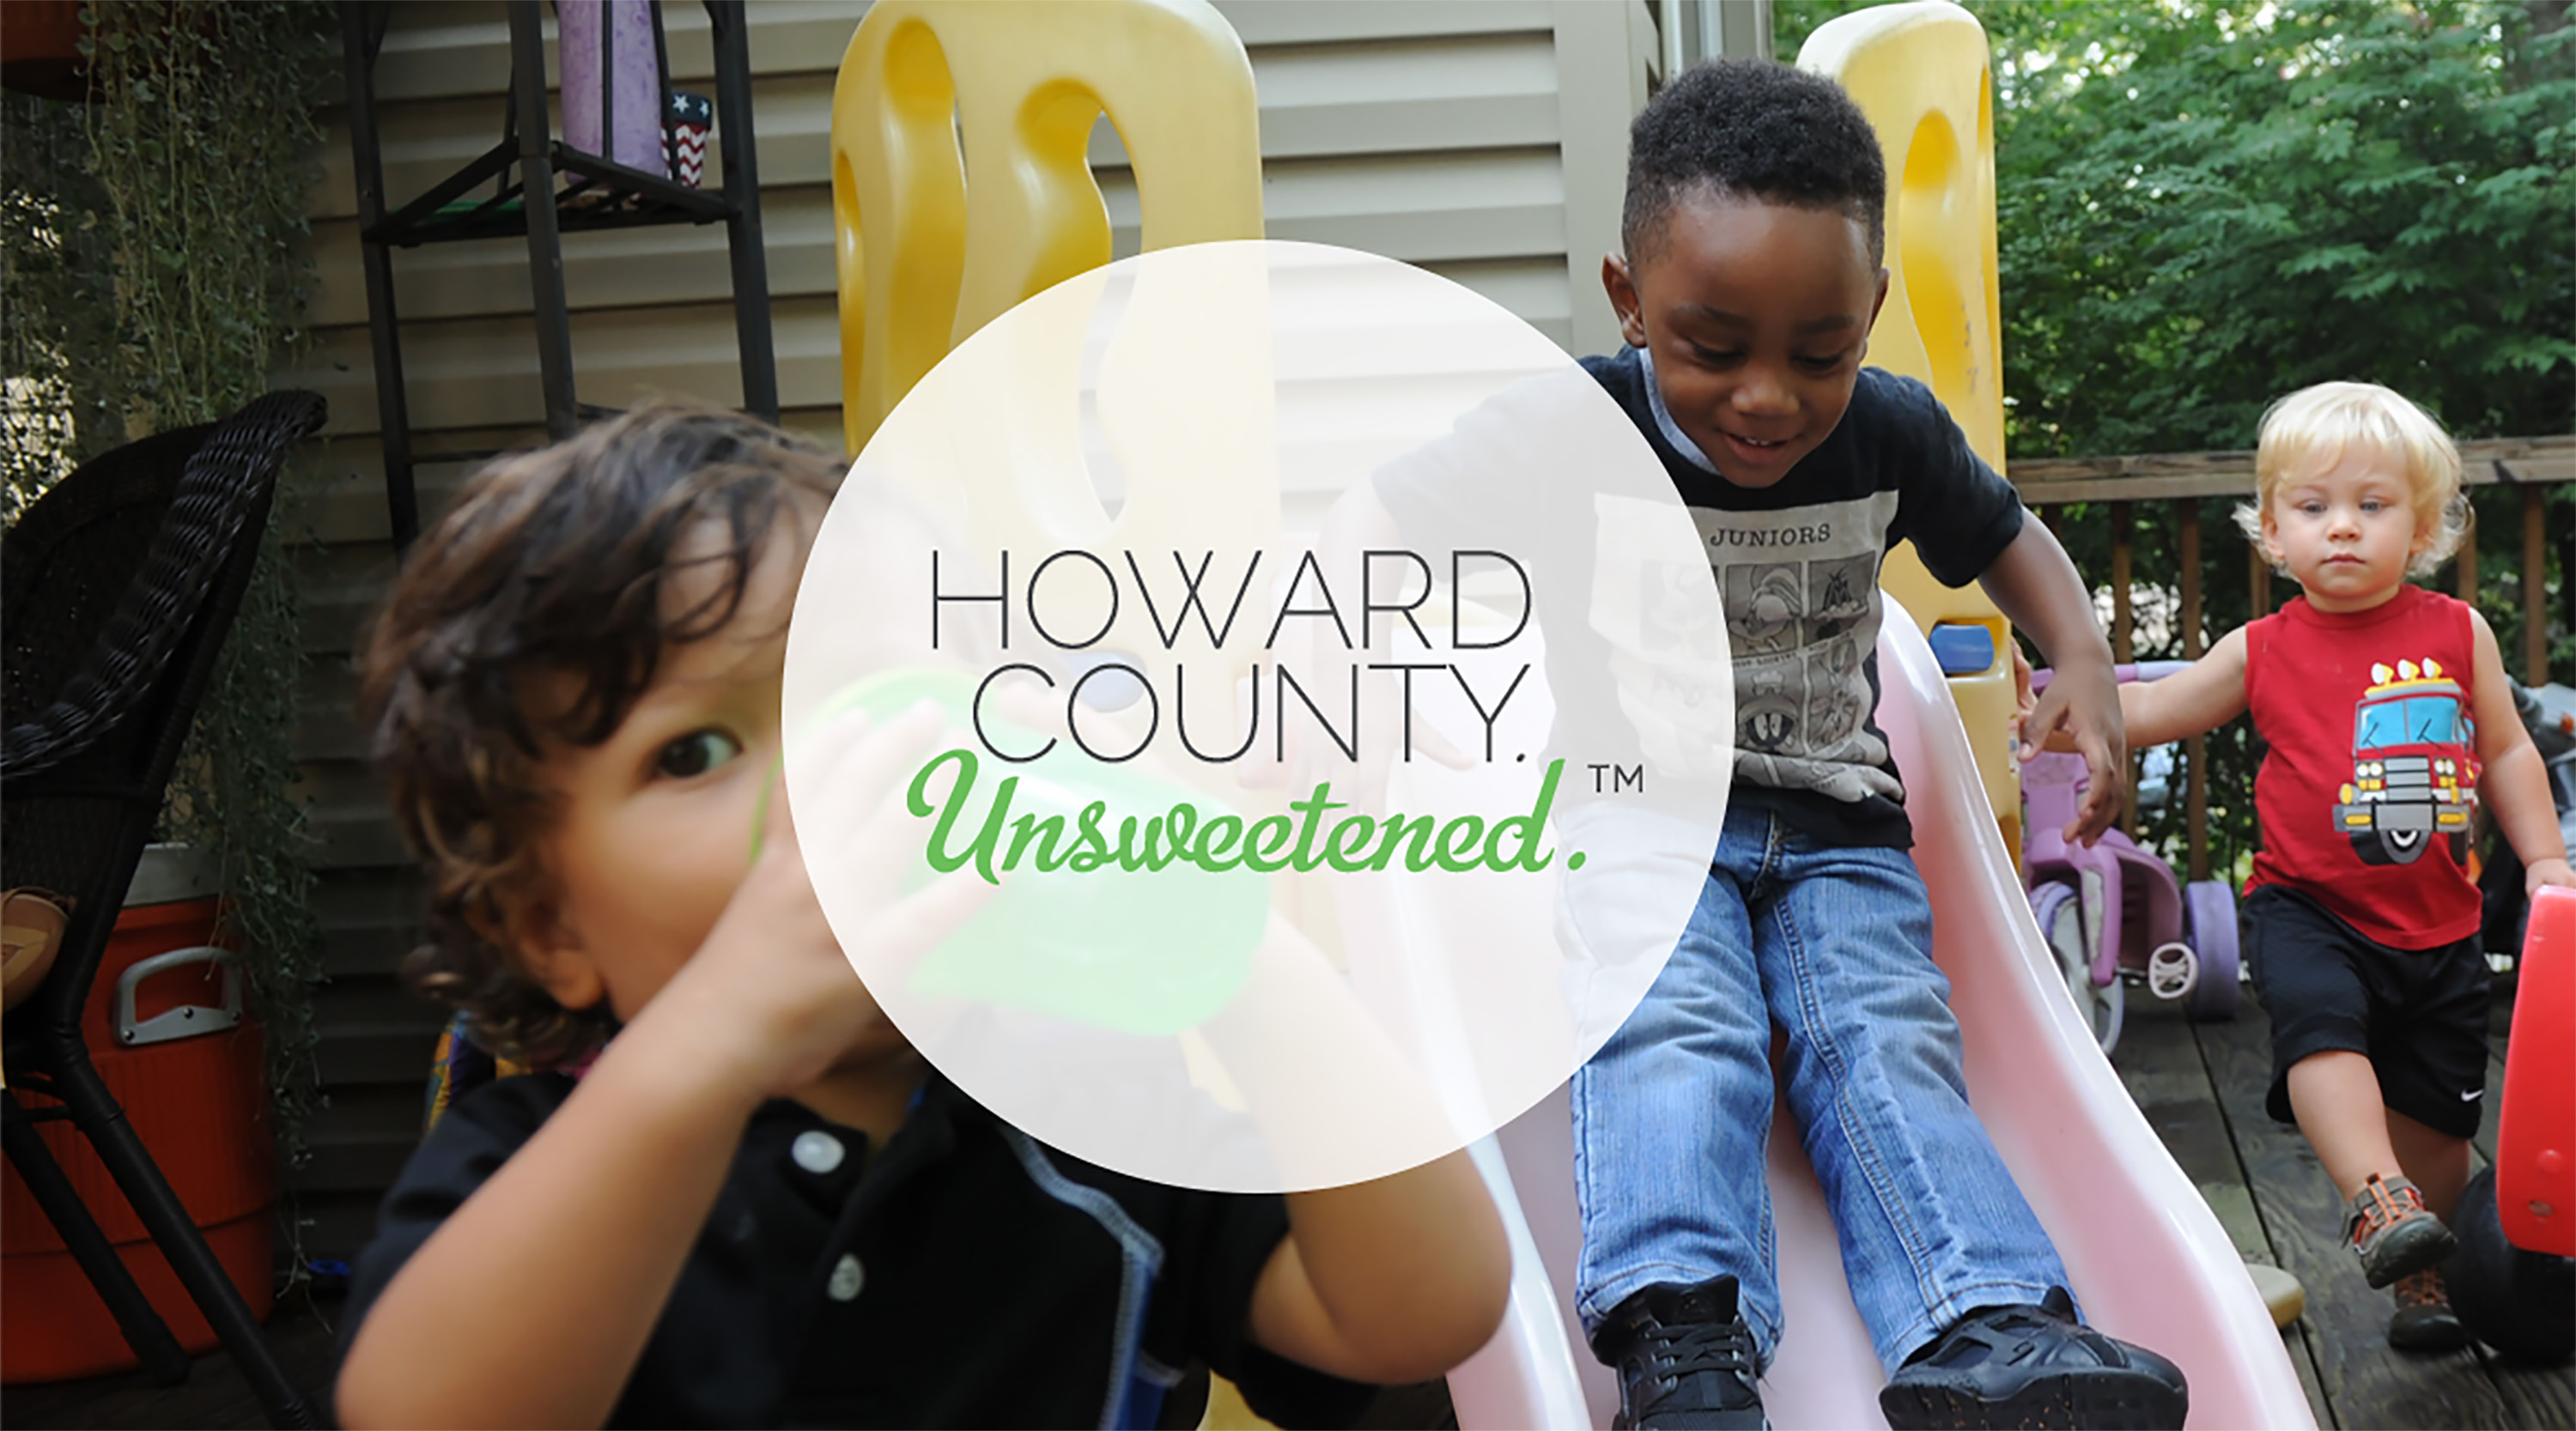 Howard County Unsweetened